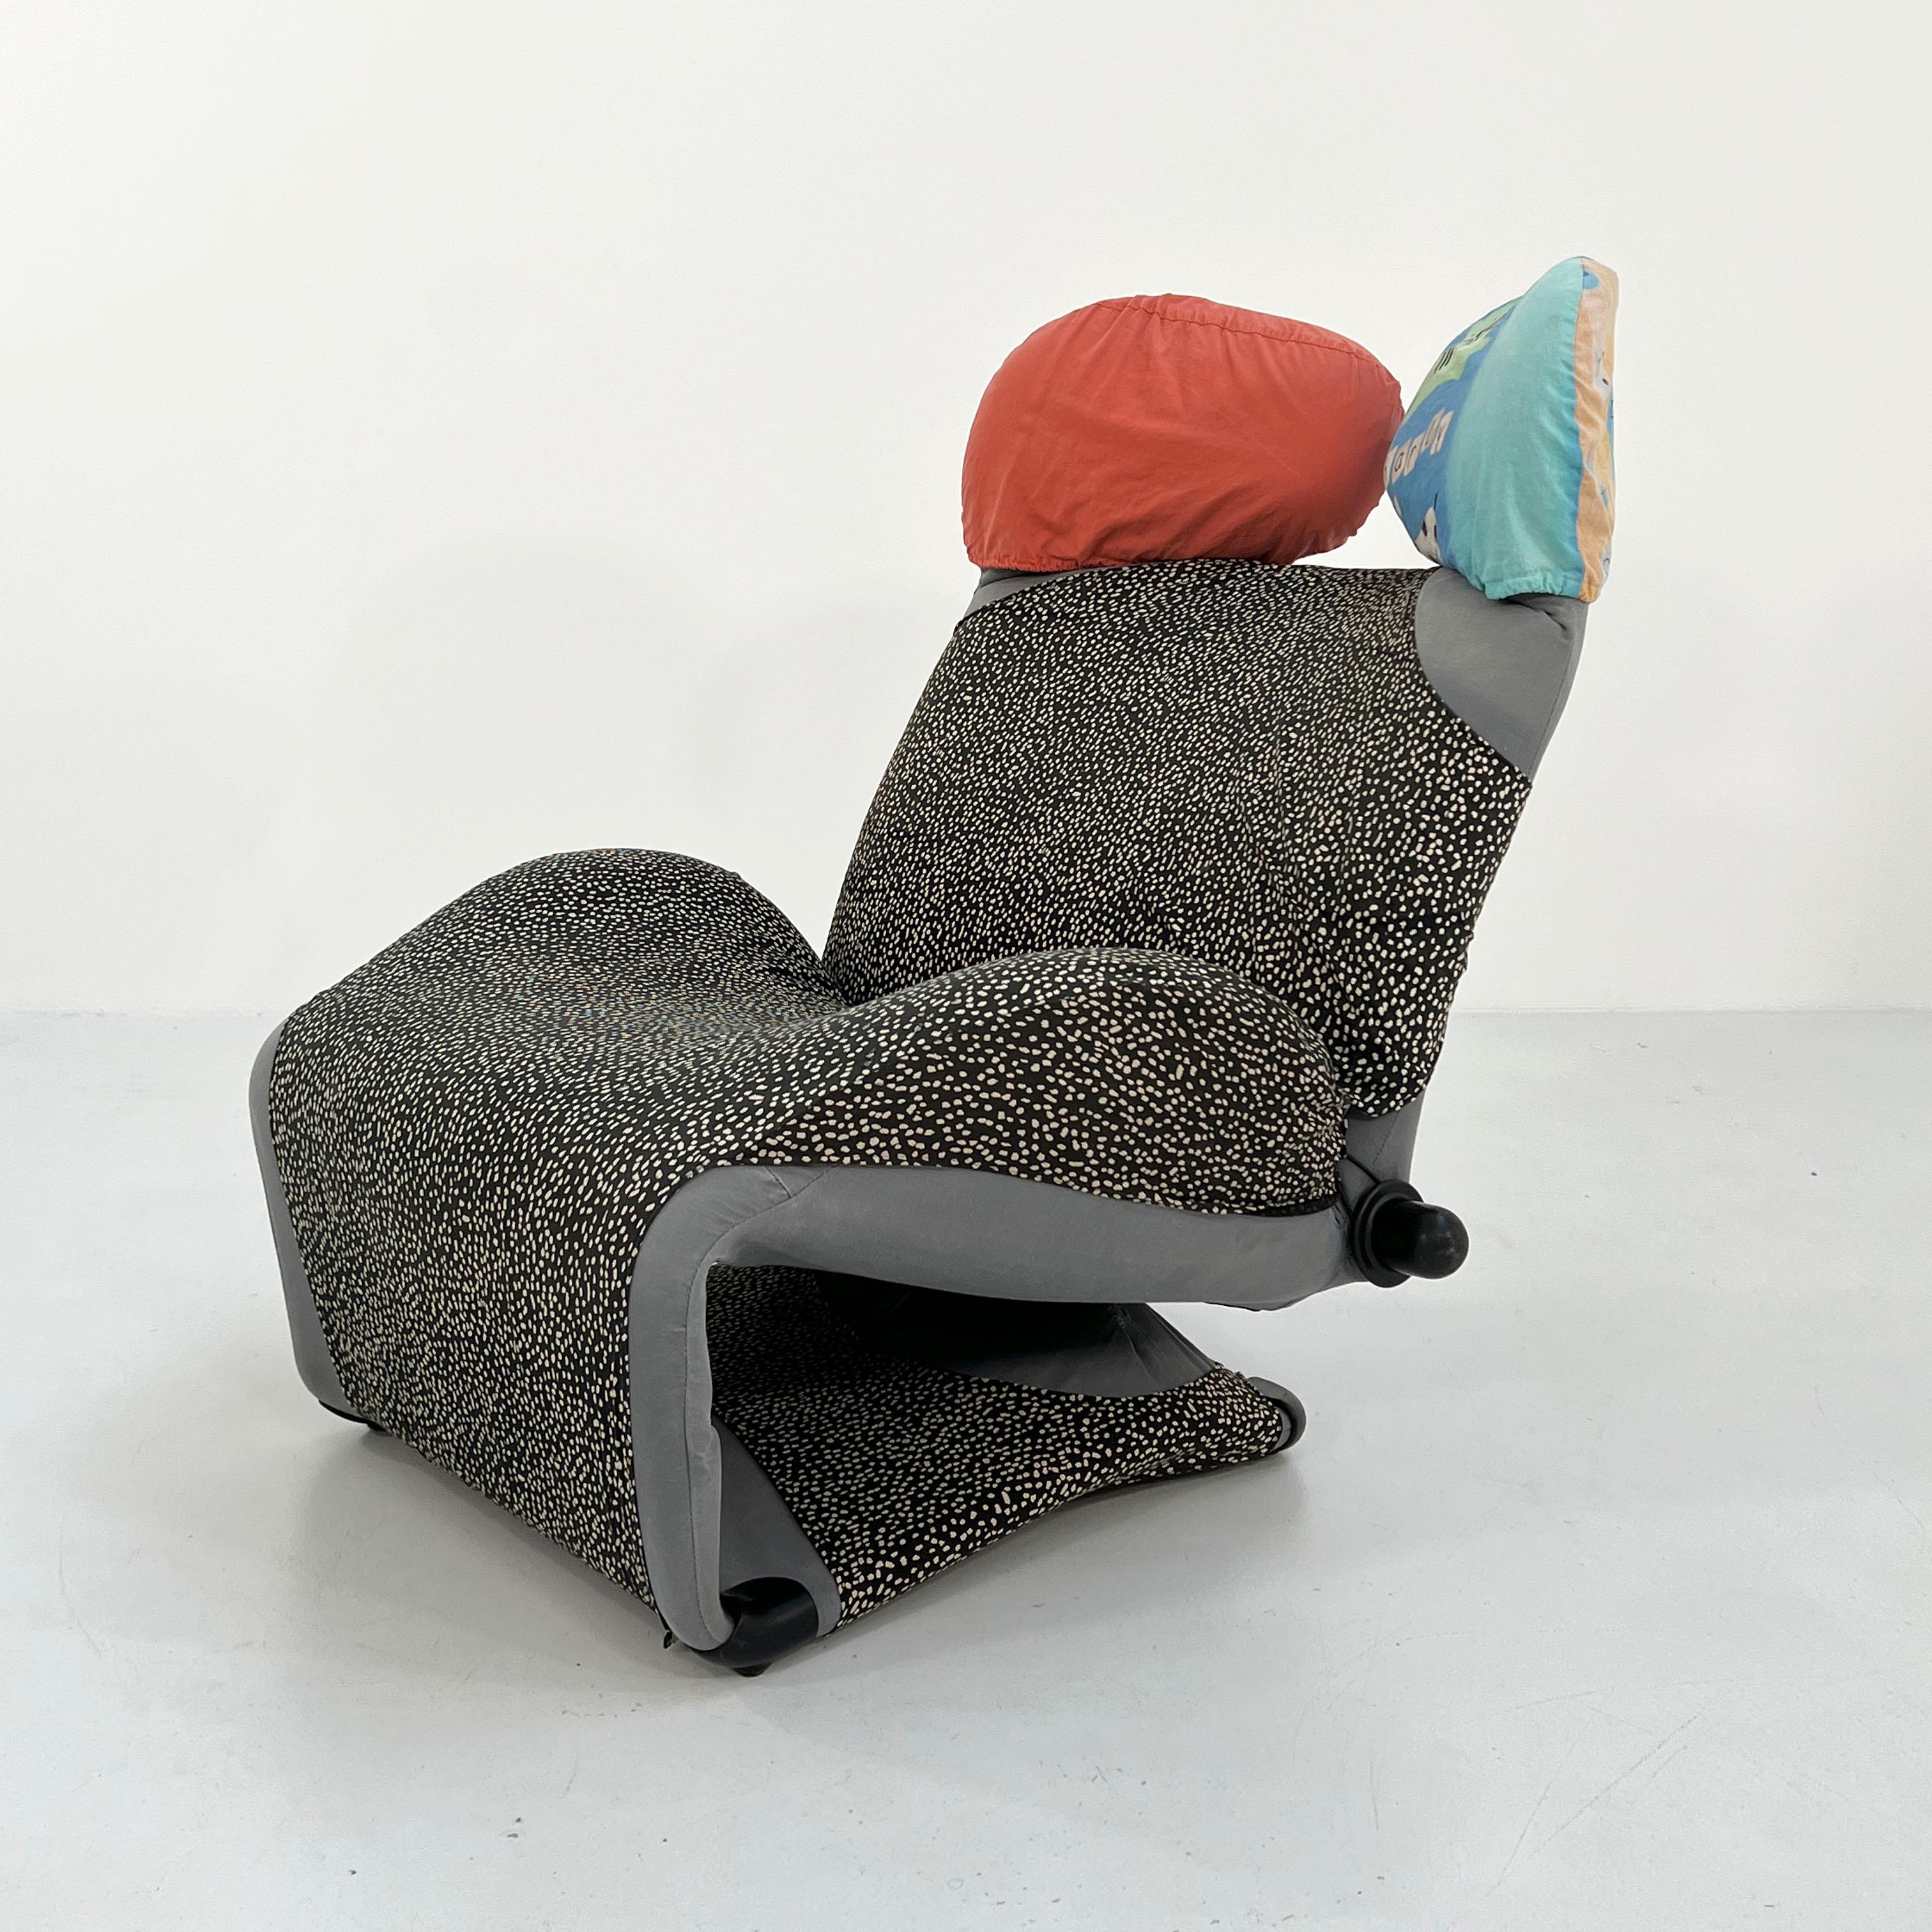 Designer - Toshiyuki Kita
Producer - Cassina
Model - Model 111 Wink Lounge Chair 
Design Period - Eighties
Measurements - Width 84  cm x Depth 100/160 cm x Height 98 cm x Seat Height 45 cm
Materials - Fabric, Foam
Color - Grey, Blue, Salmon